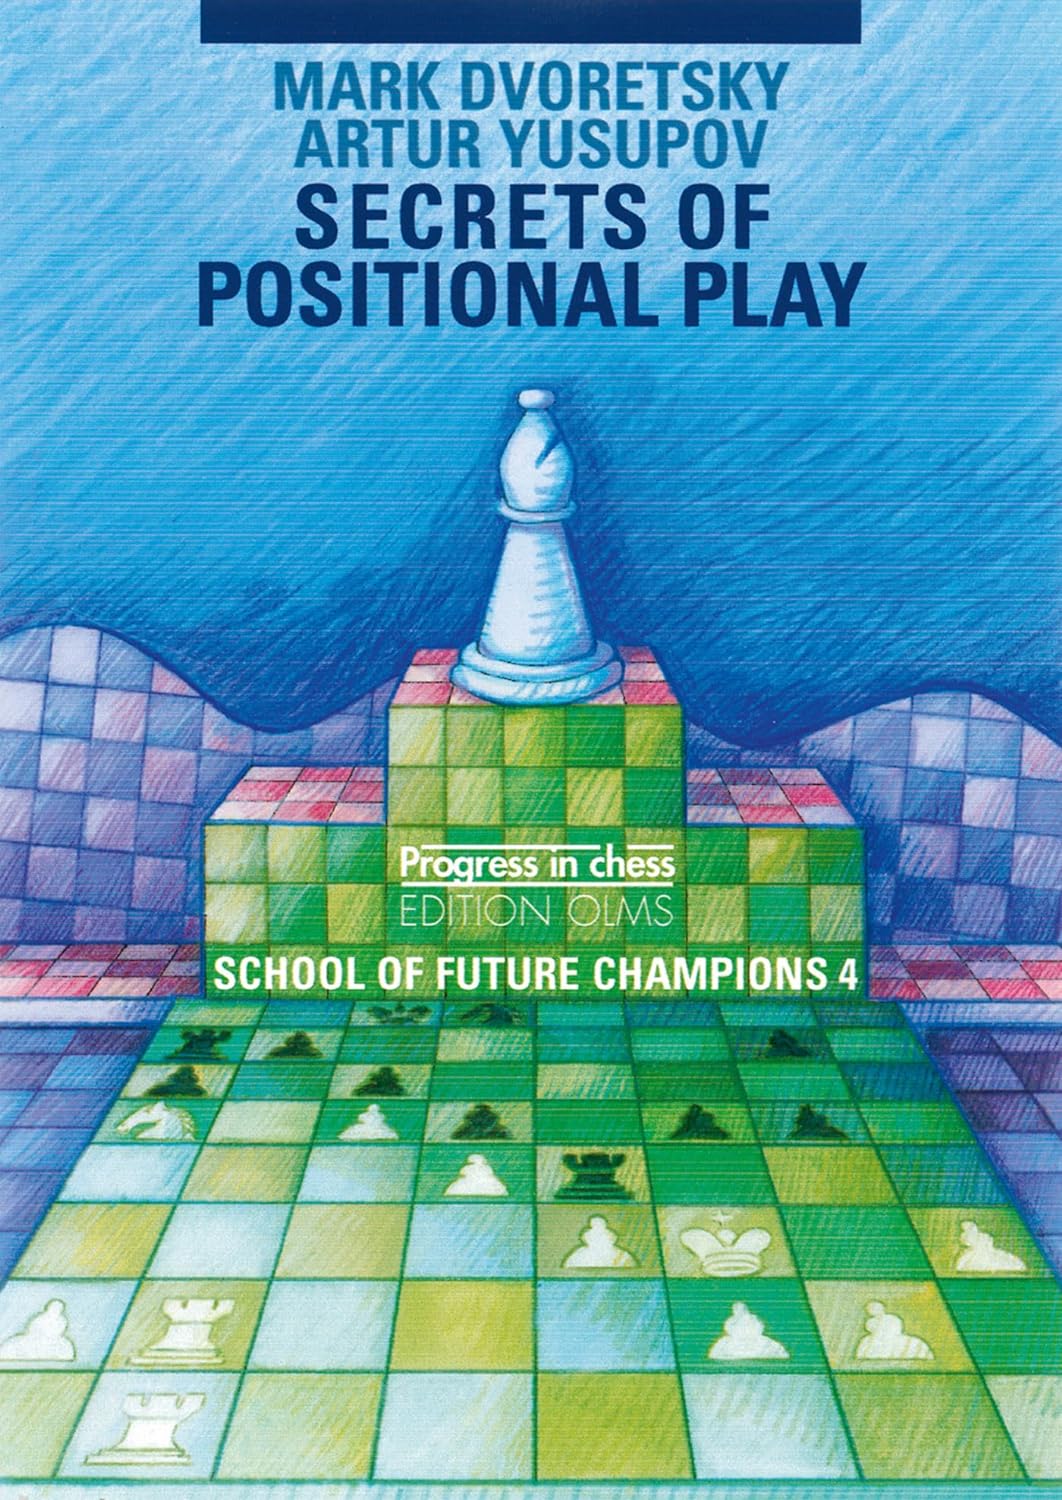 Dvoretsky/Yusupov: The School of future Champions 4 - Secrets of positional Play